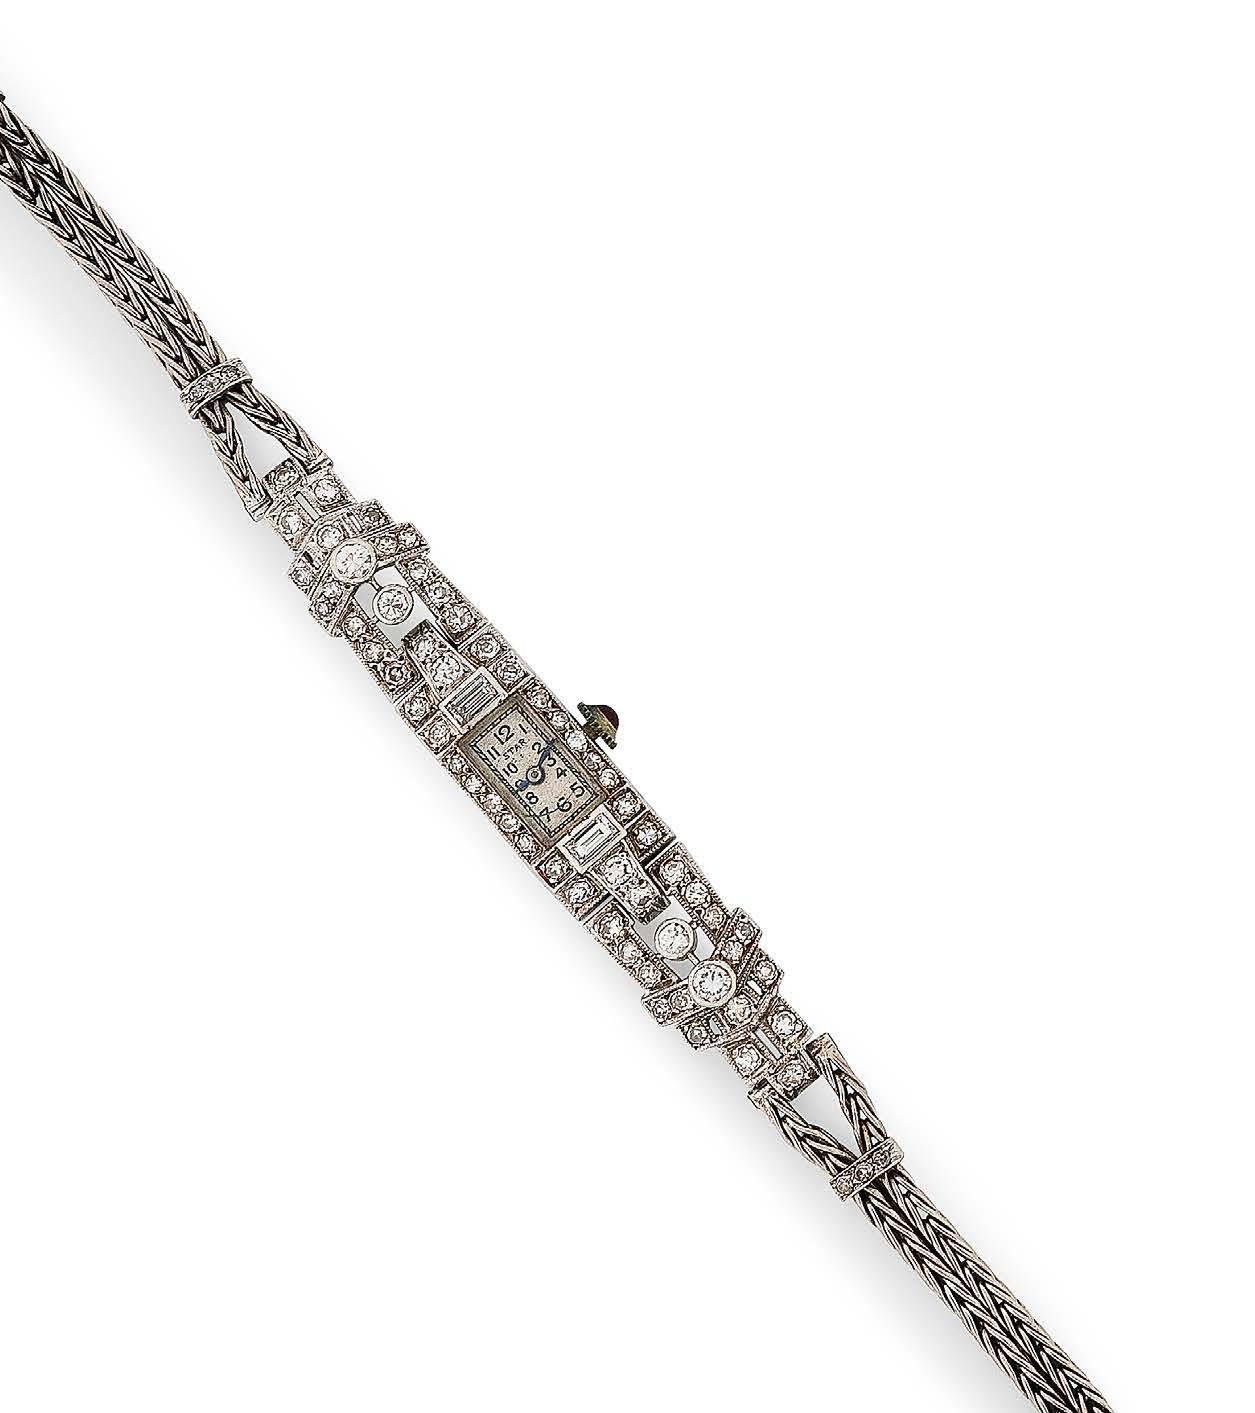 STAR Montre bracelet de dame en platine (850) et or gris (750).
Boîtier en plati&hellip;